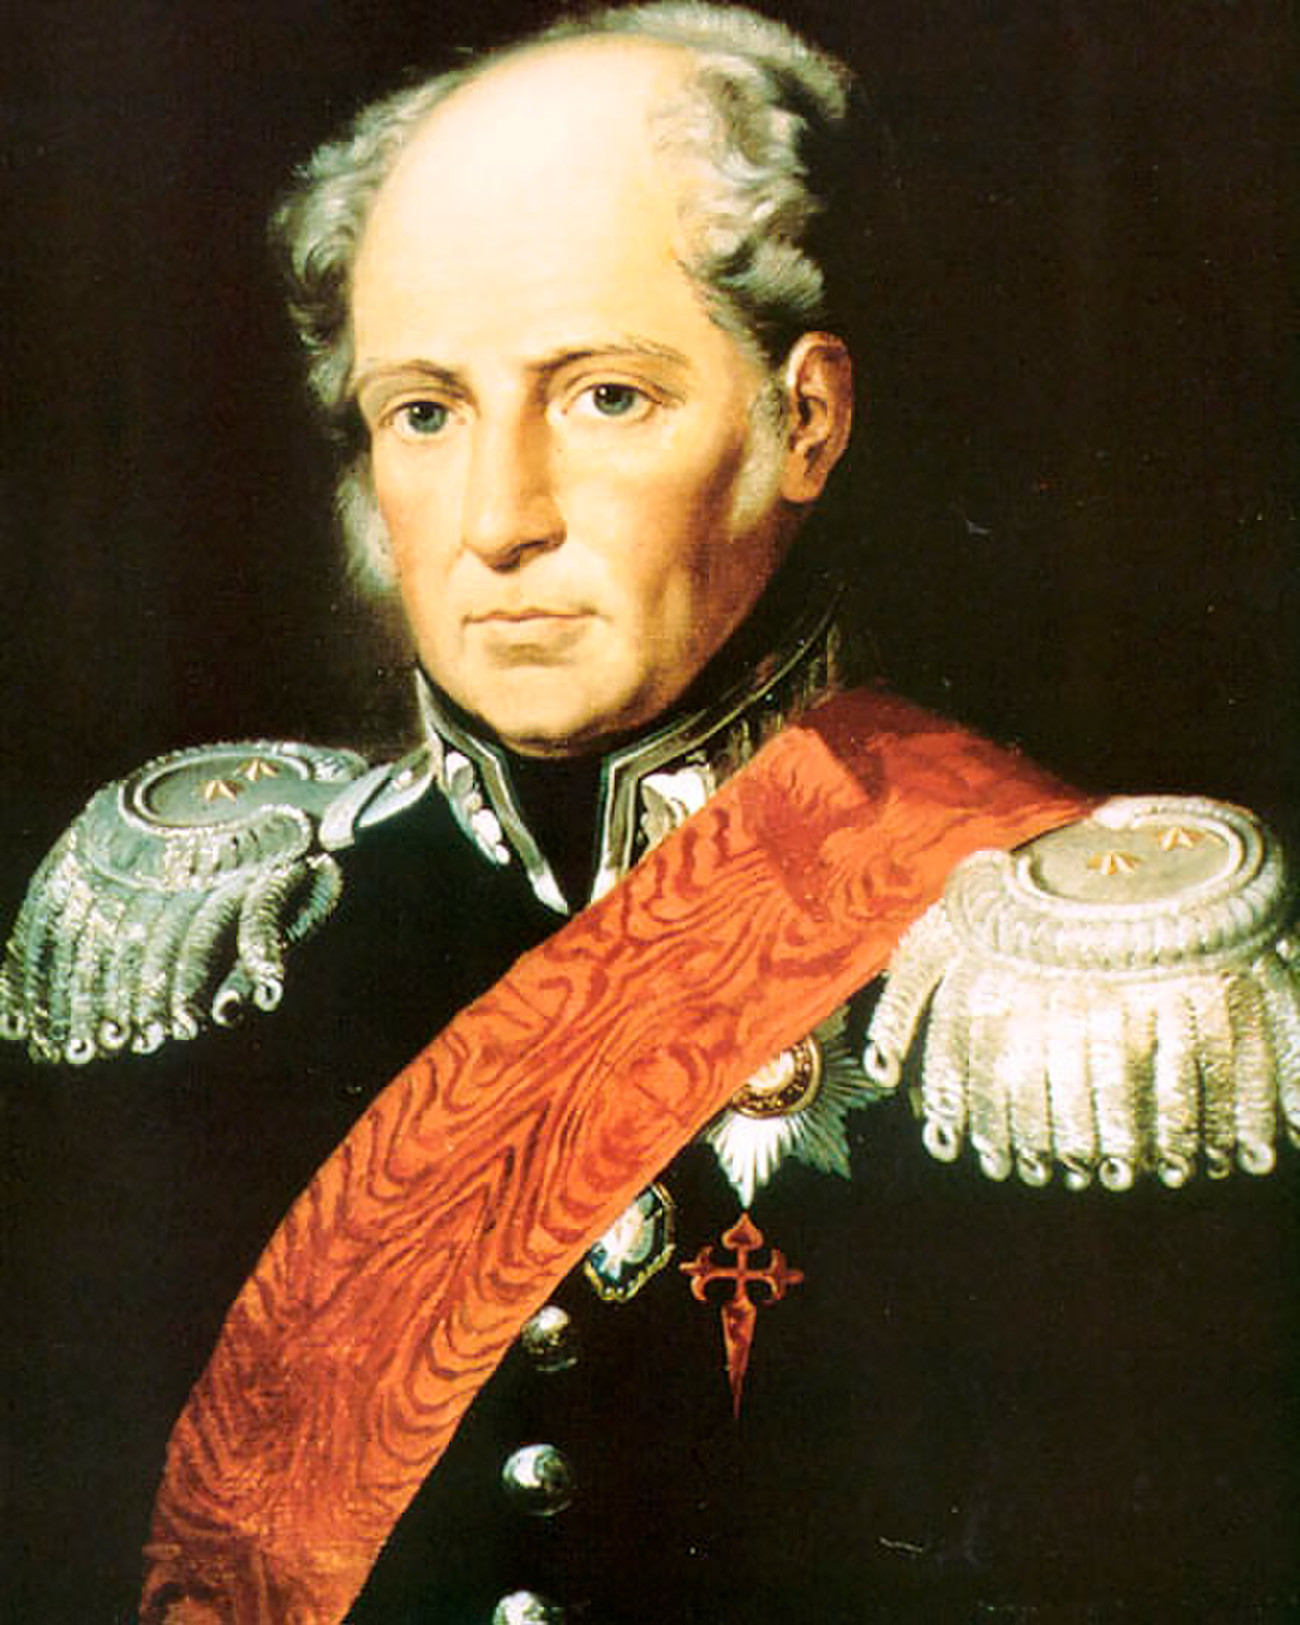 Agustín de Betancourt

